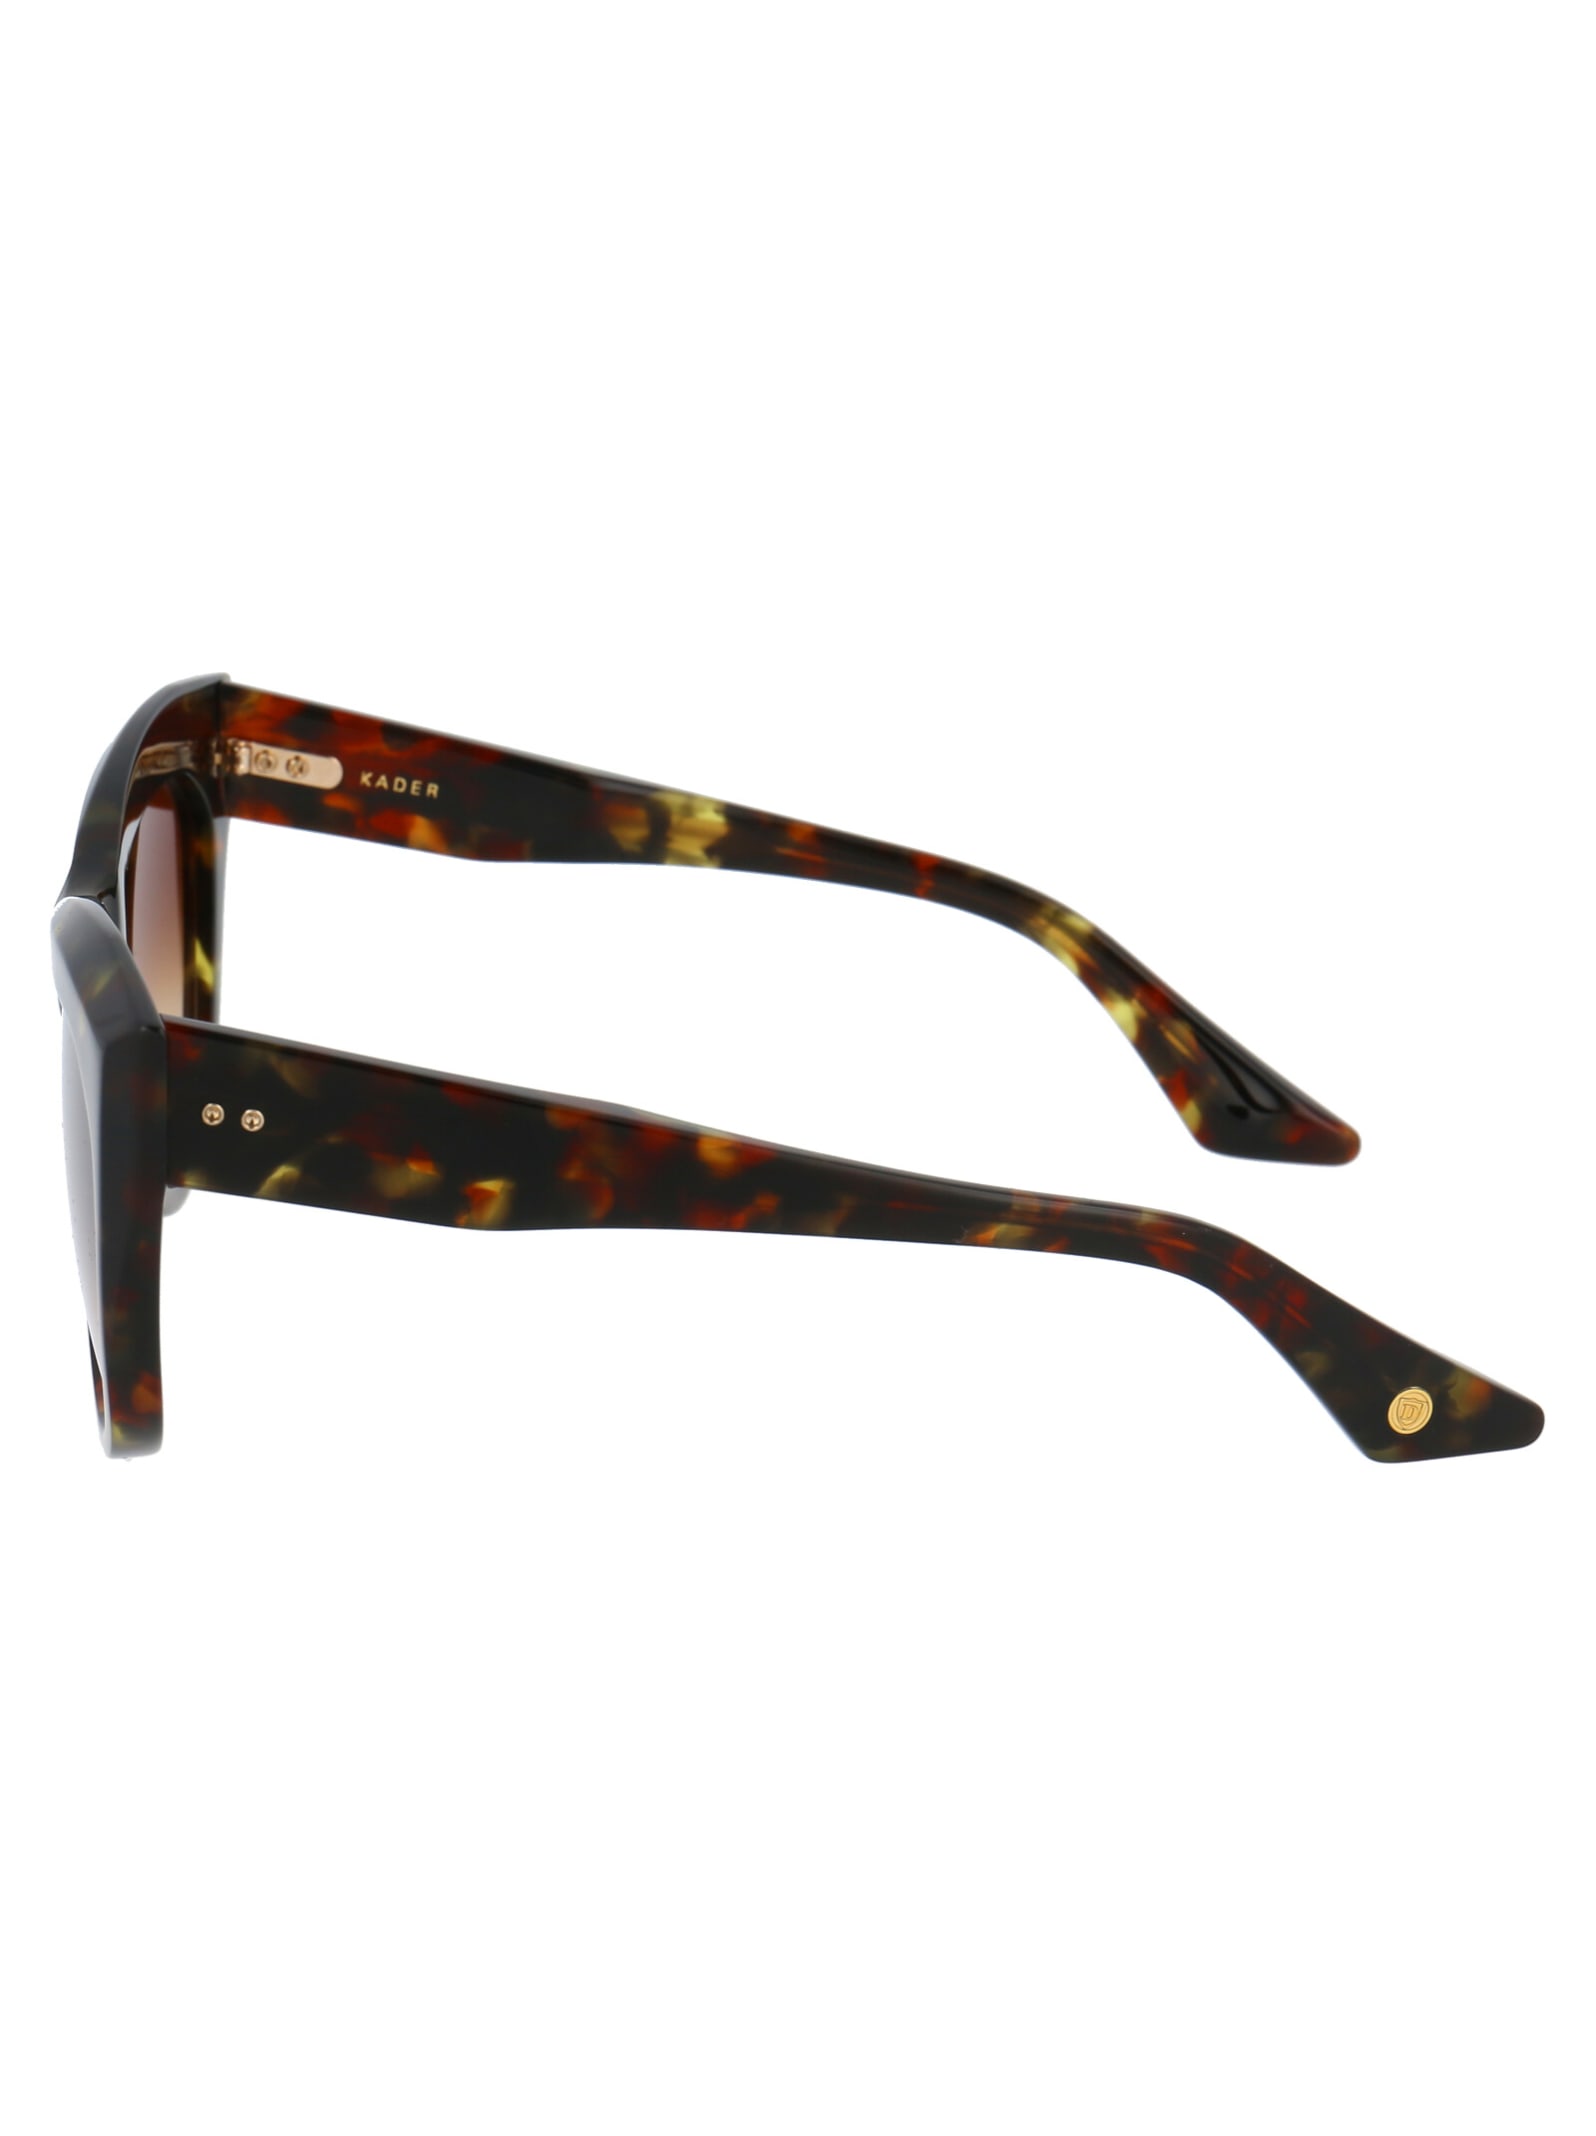 Shop Dita Kader Sunglasses In Haute Tortoise